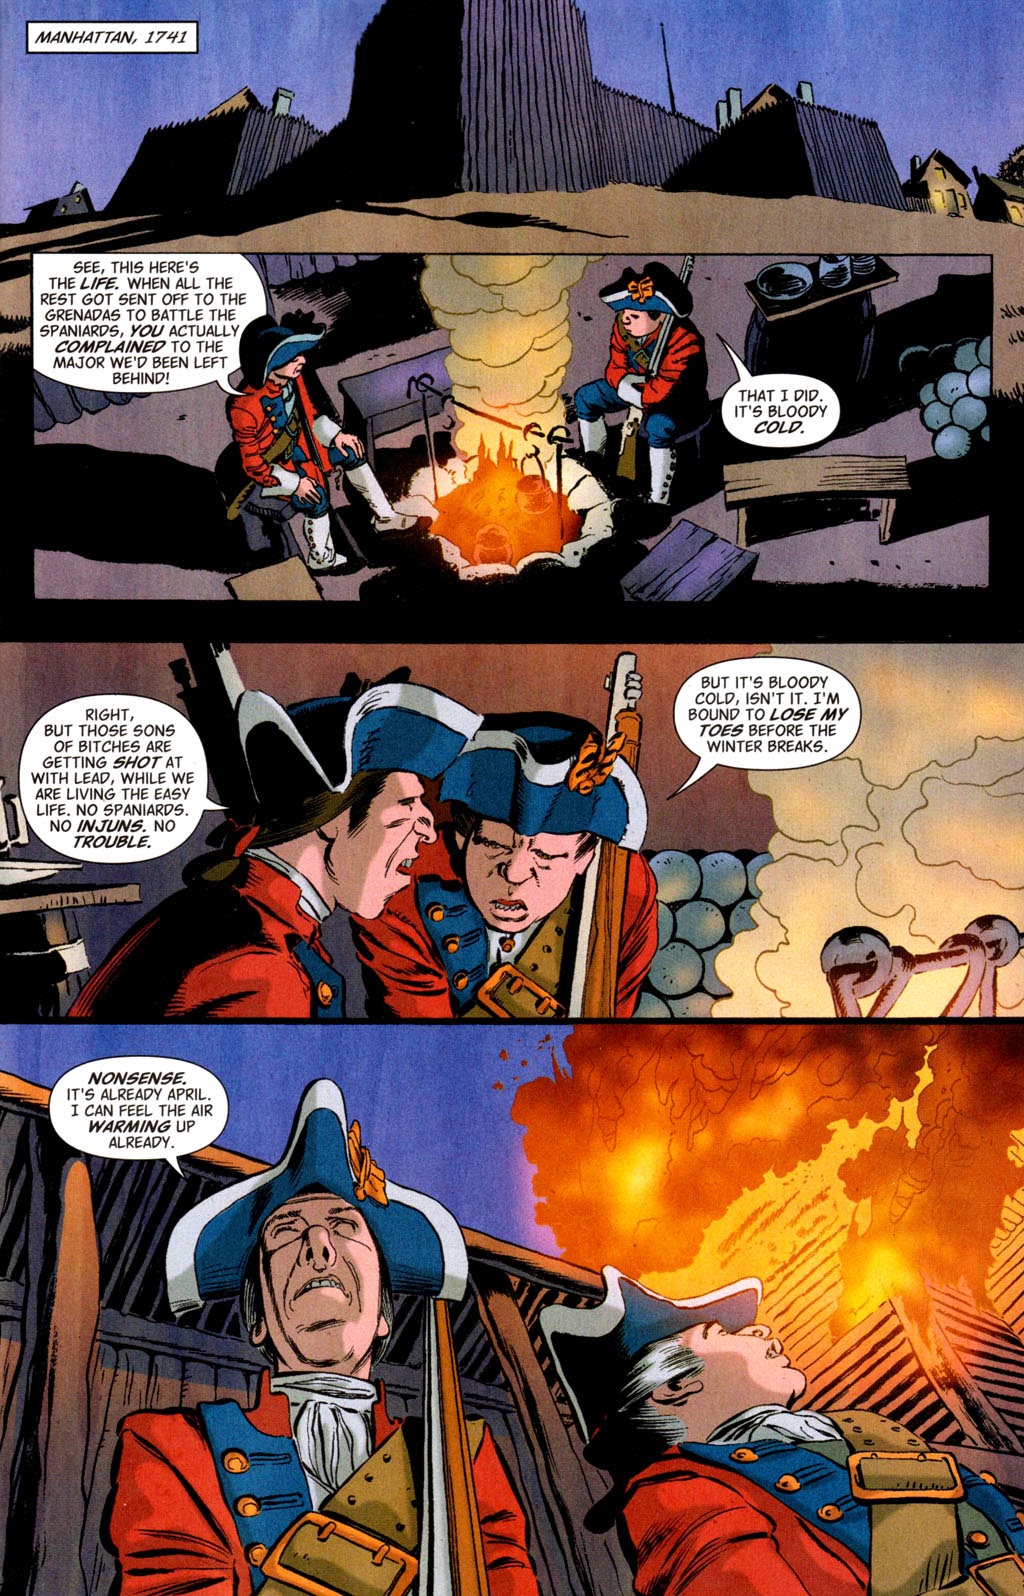 John Constantine - Hellblazer Special: Papa Midnite issue 4 - Page 2